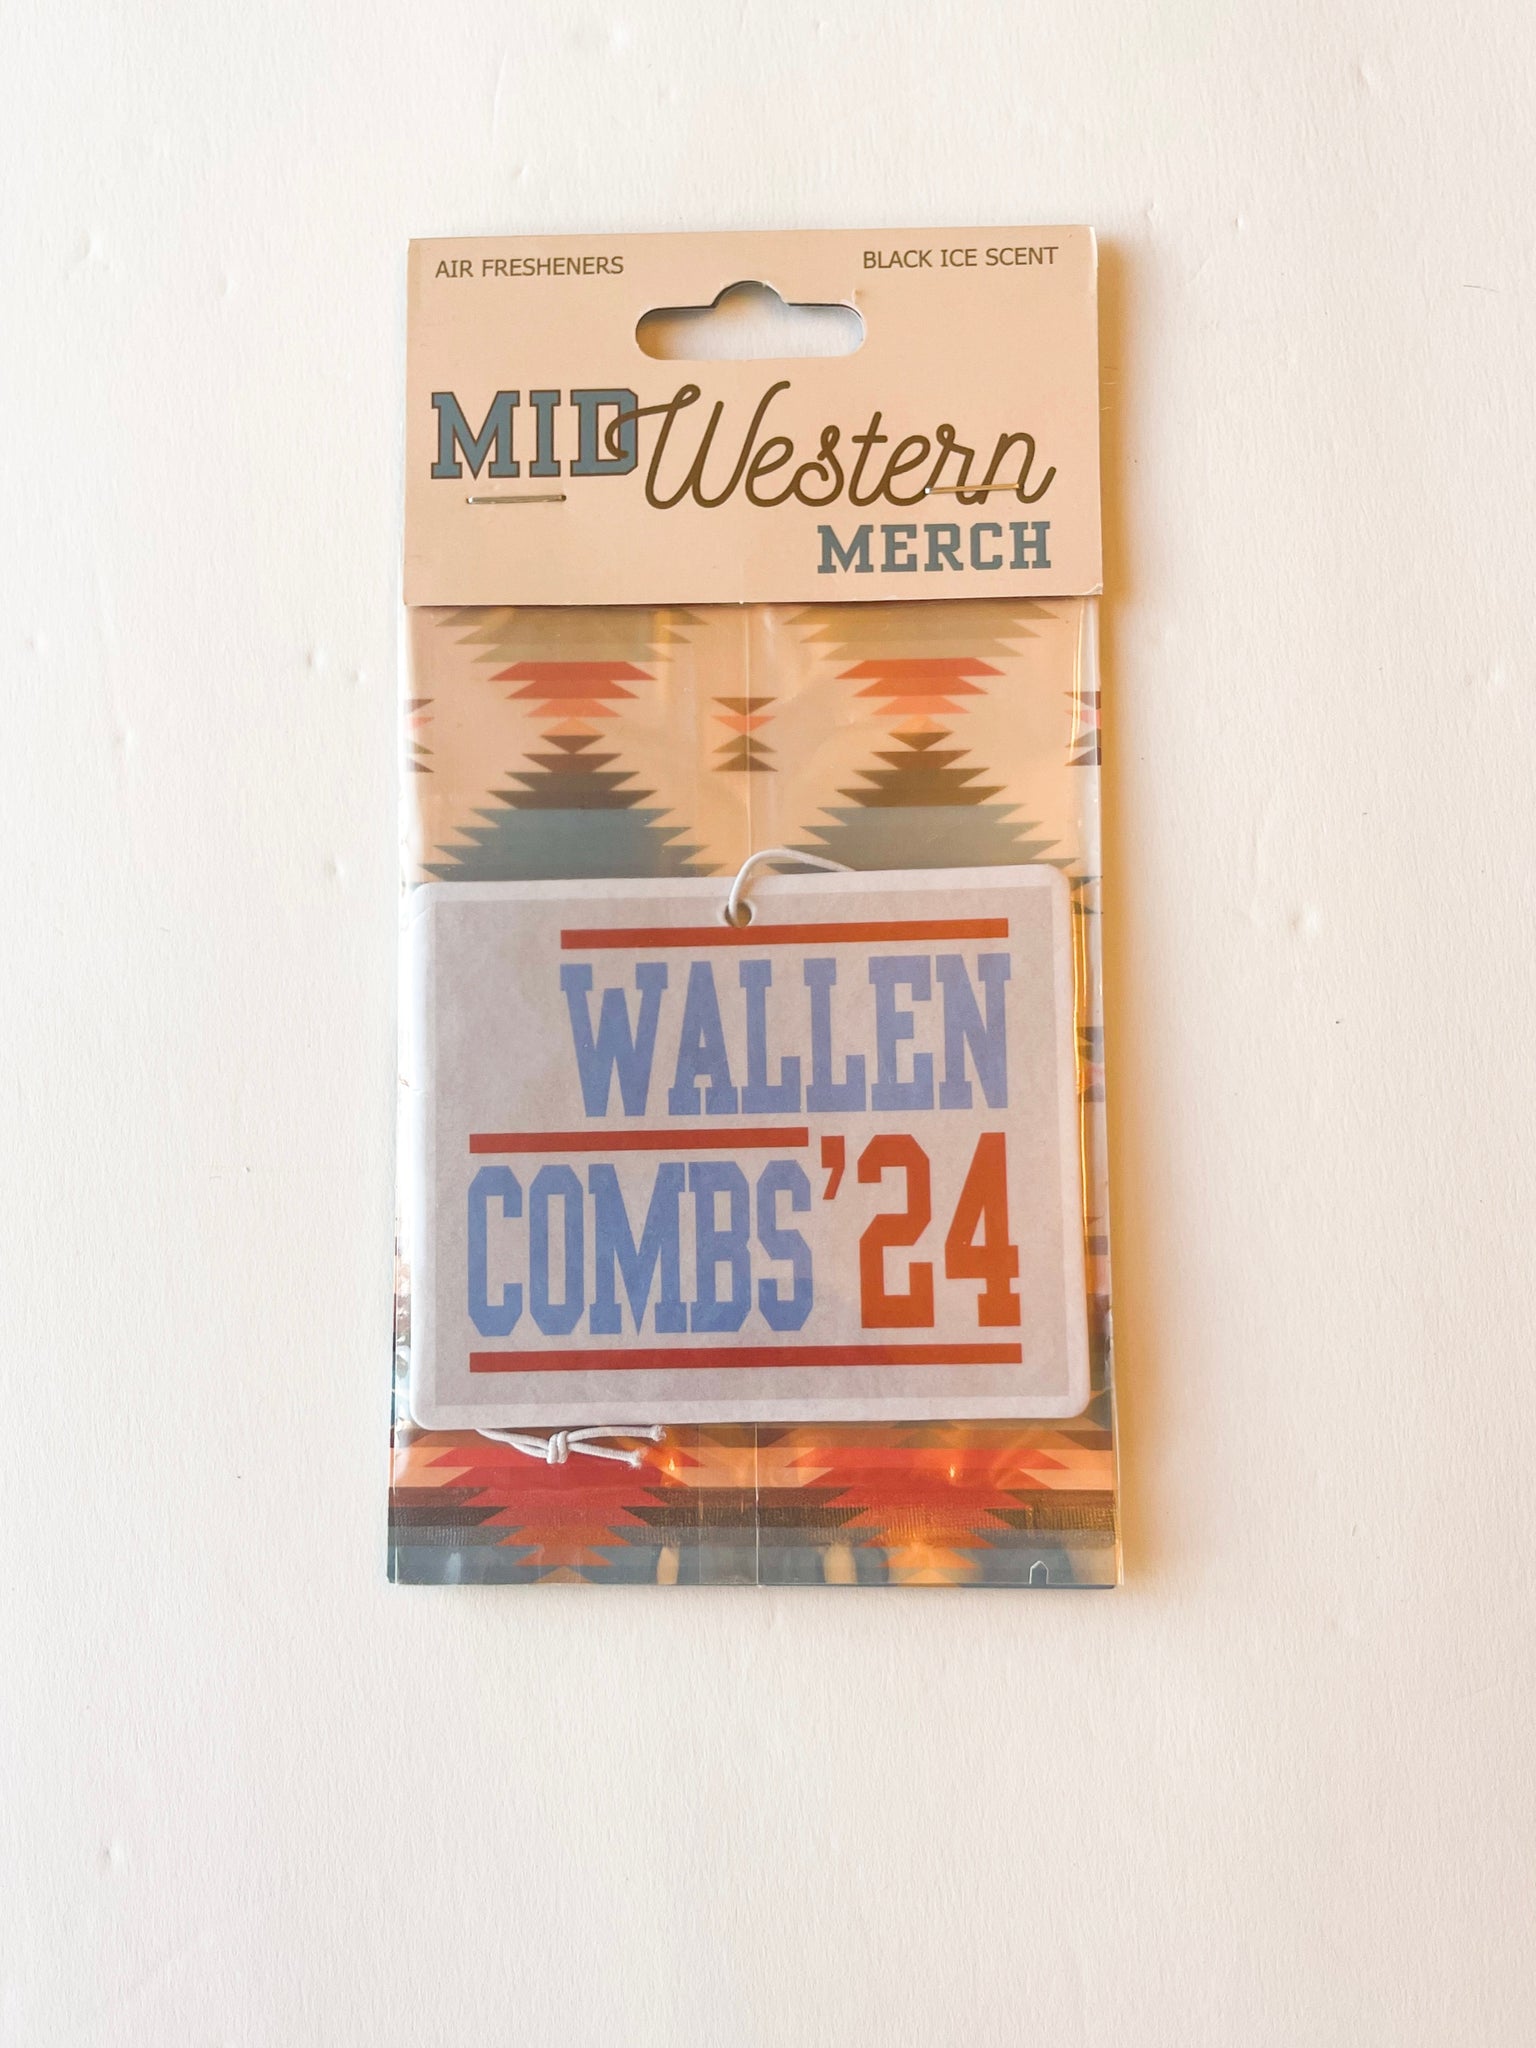 Wallen Combs ‘24 Car Air Freshener